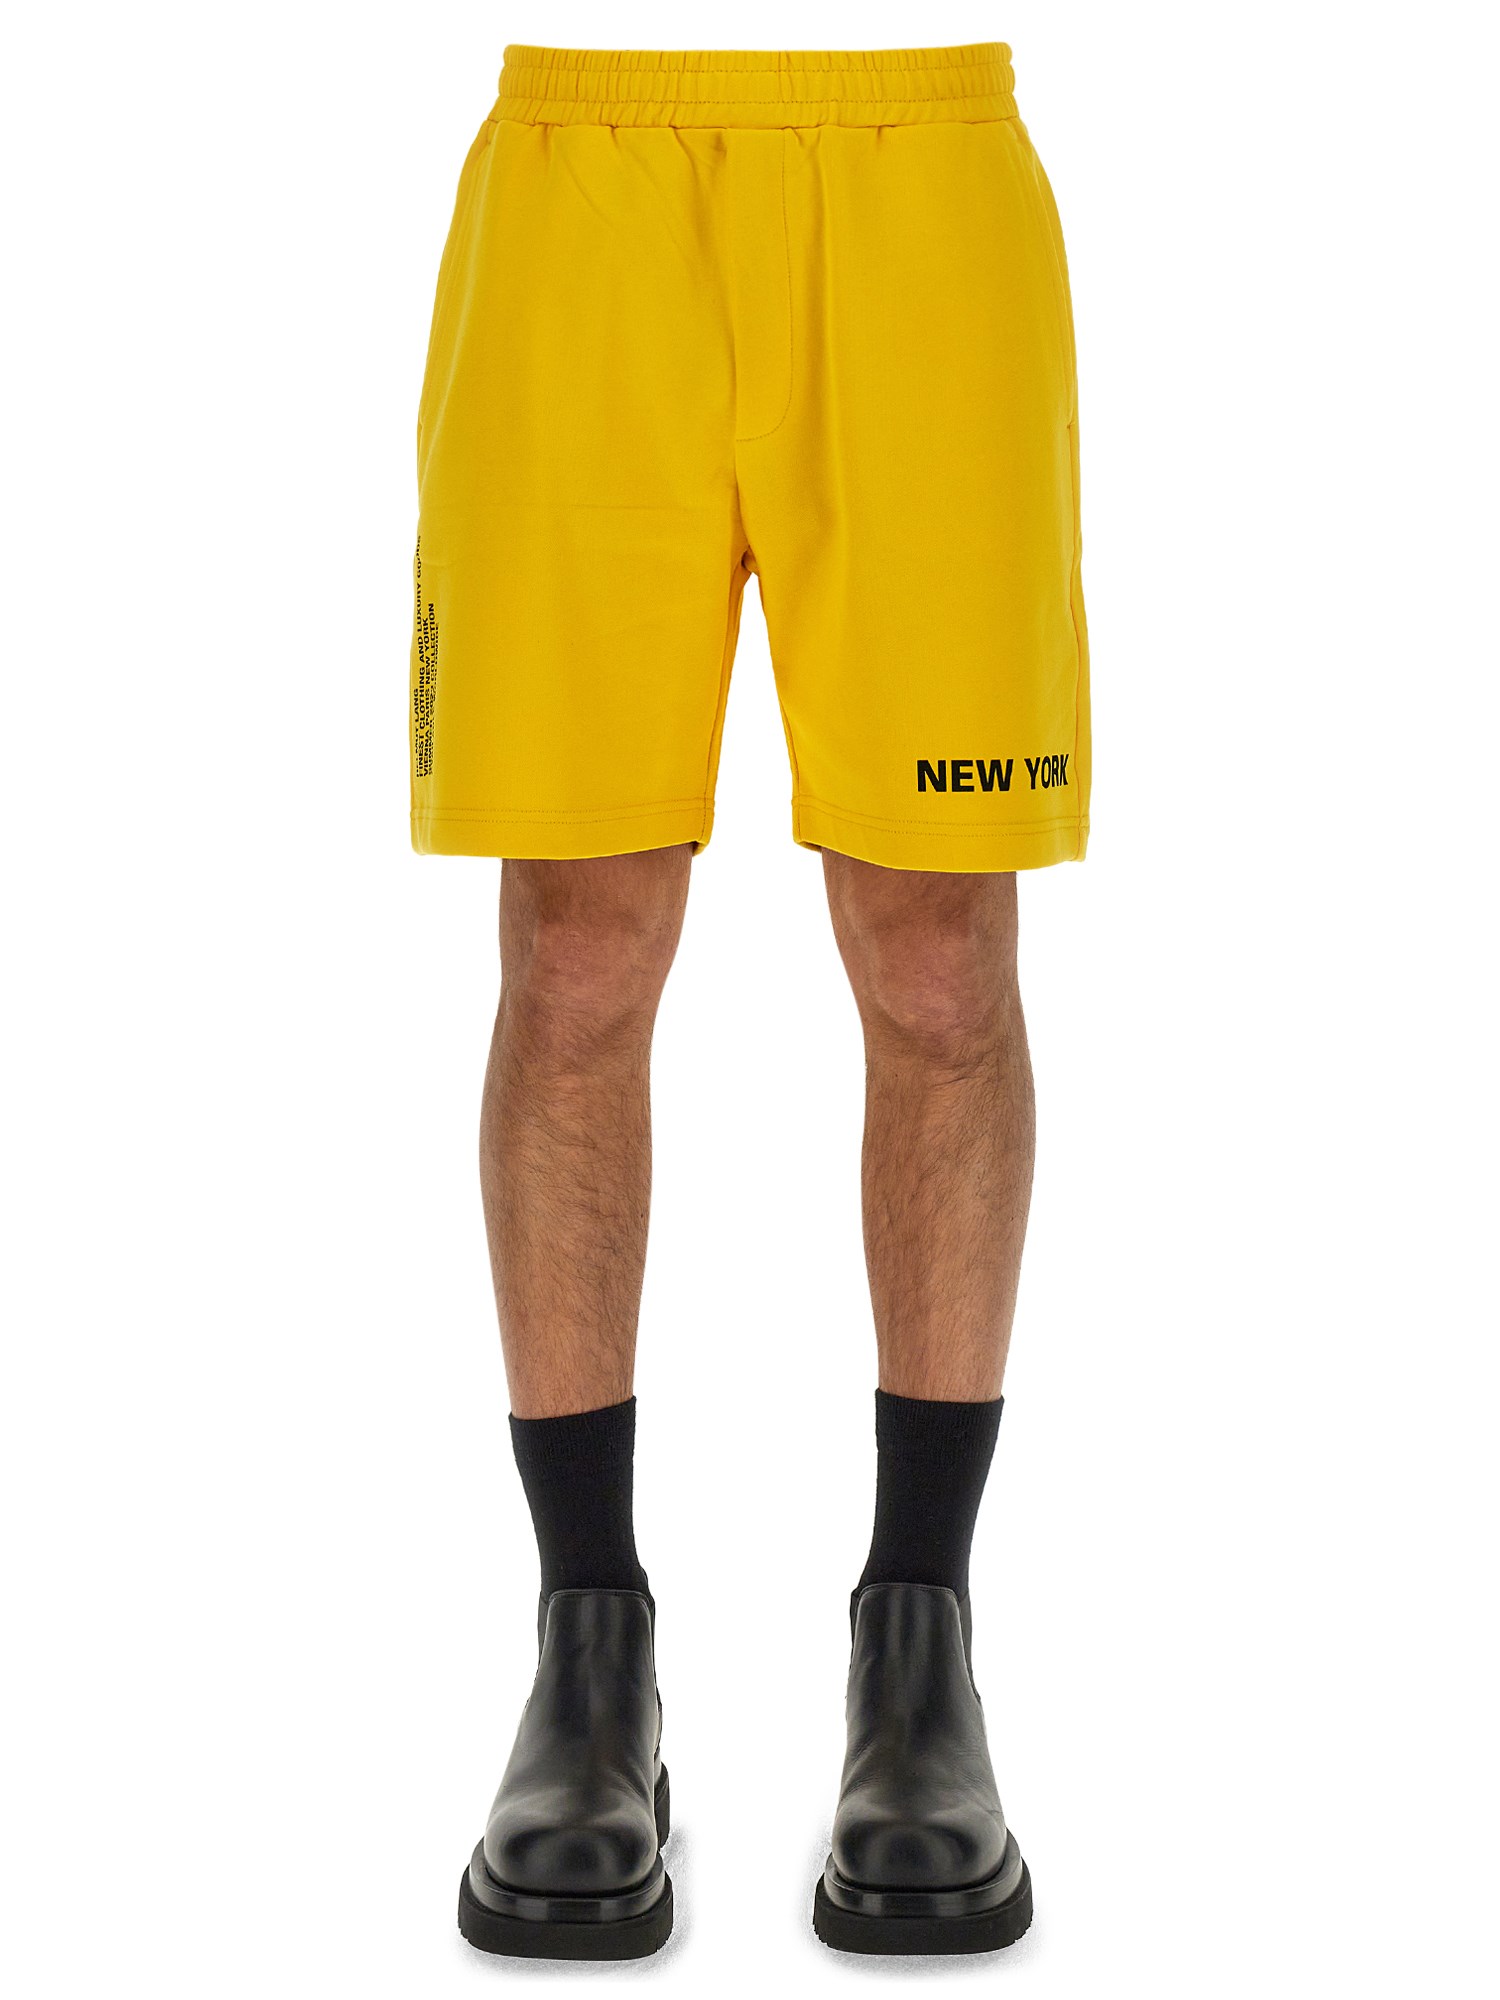 helmut lang bermuda shorts "new york"